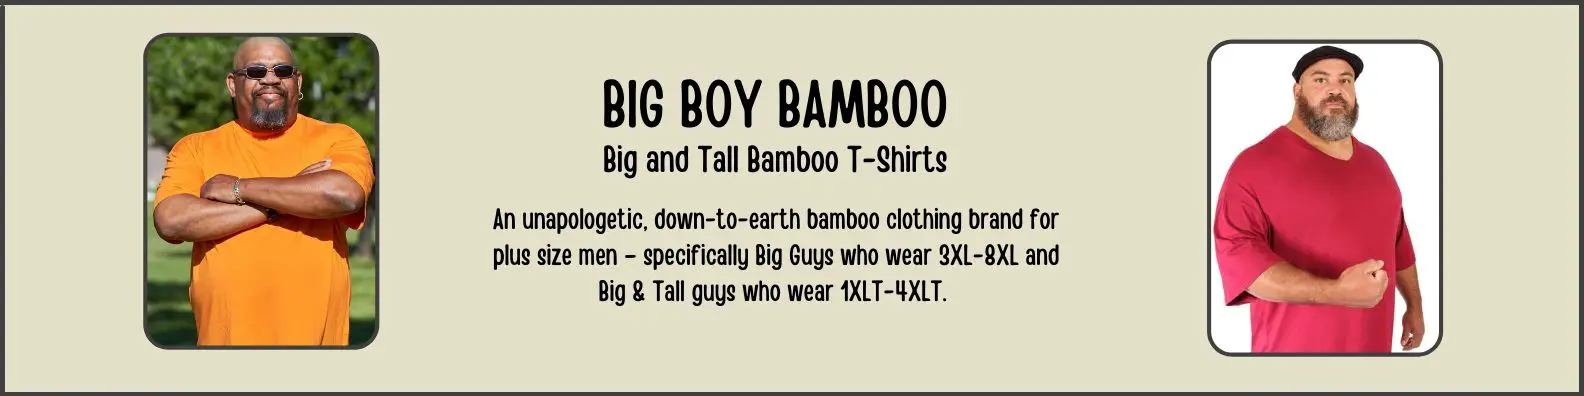 Big Boy Bamboo Banner